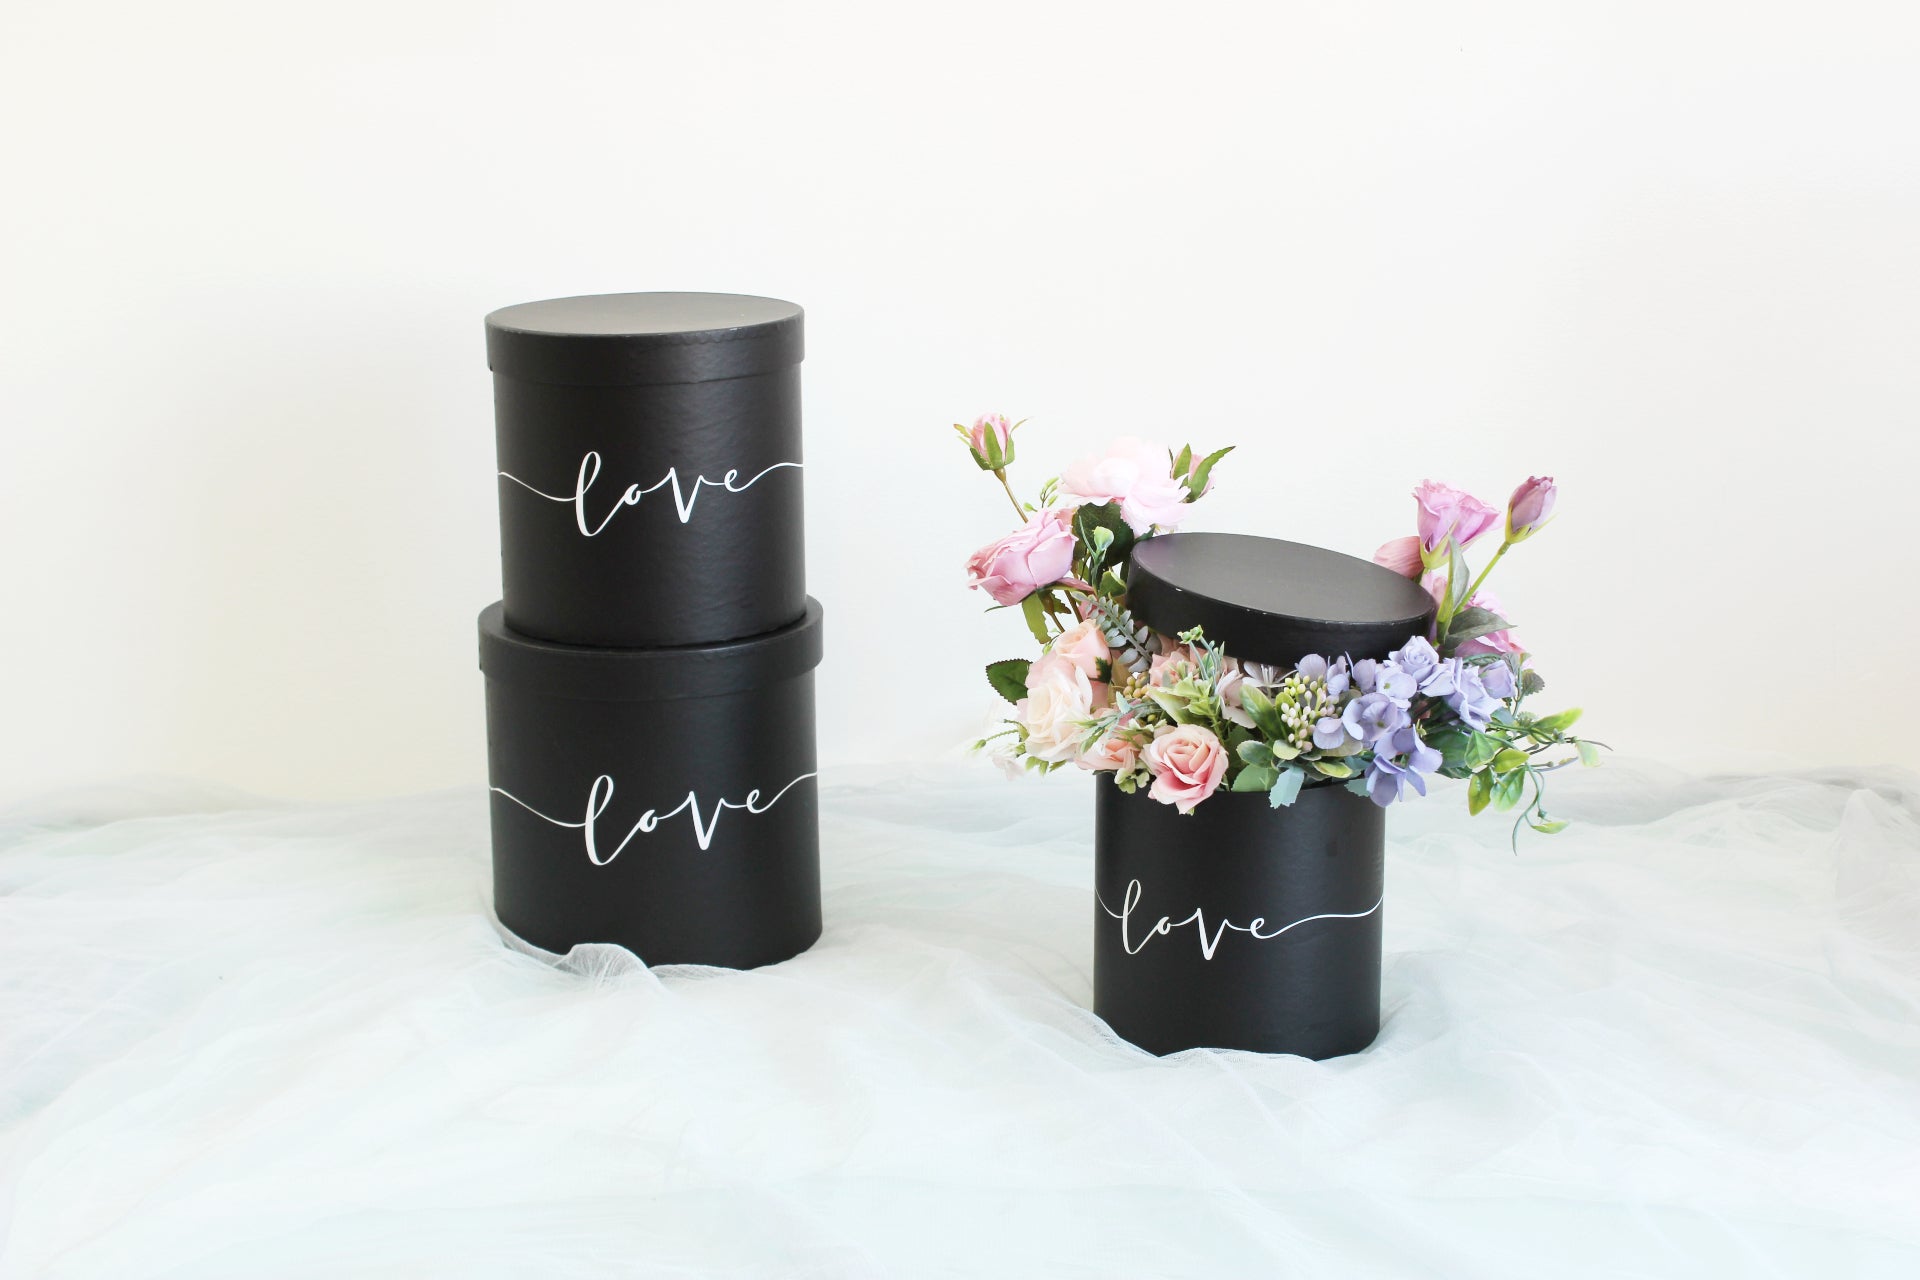 Soul & Lane Floral Hat Round Boxes with Lids - Set of 3: Nesting Cardboard  Hat Storage, Large Black …See more Soul & Lane Floral Hat Round Boxes with